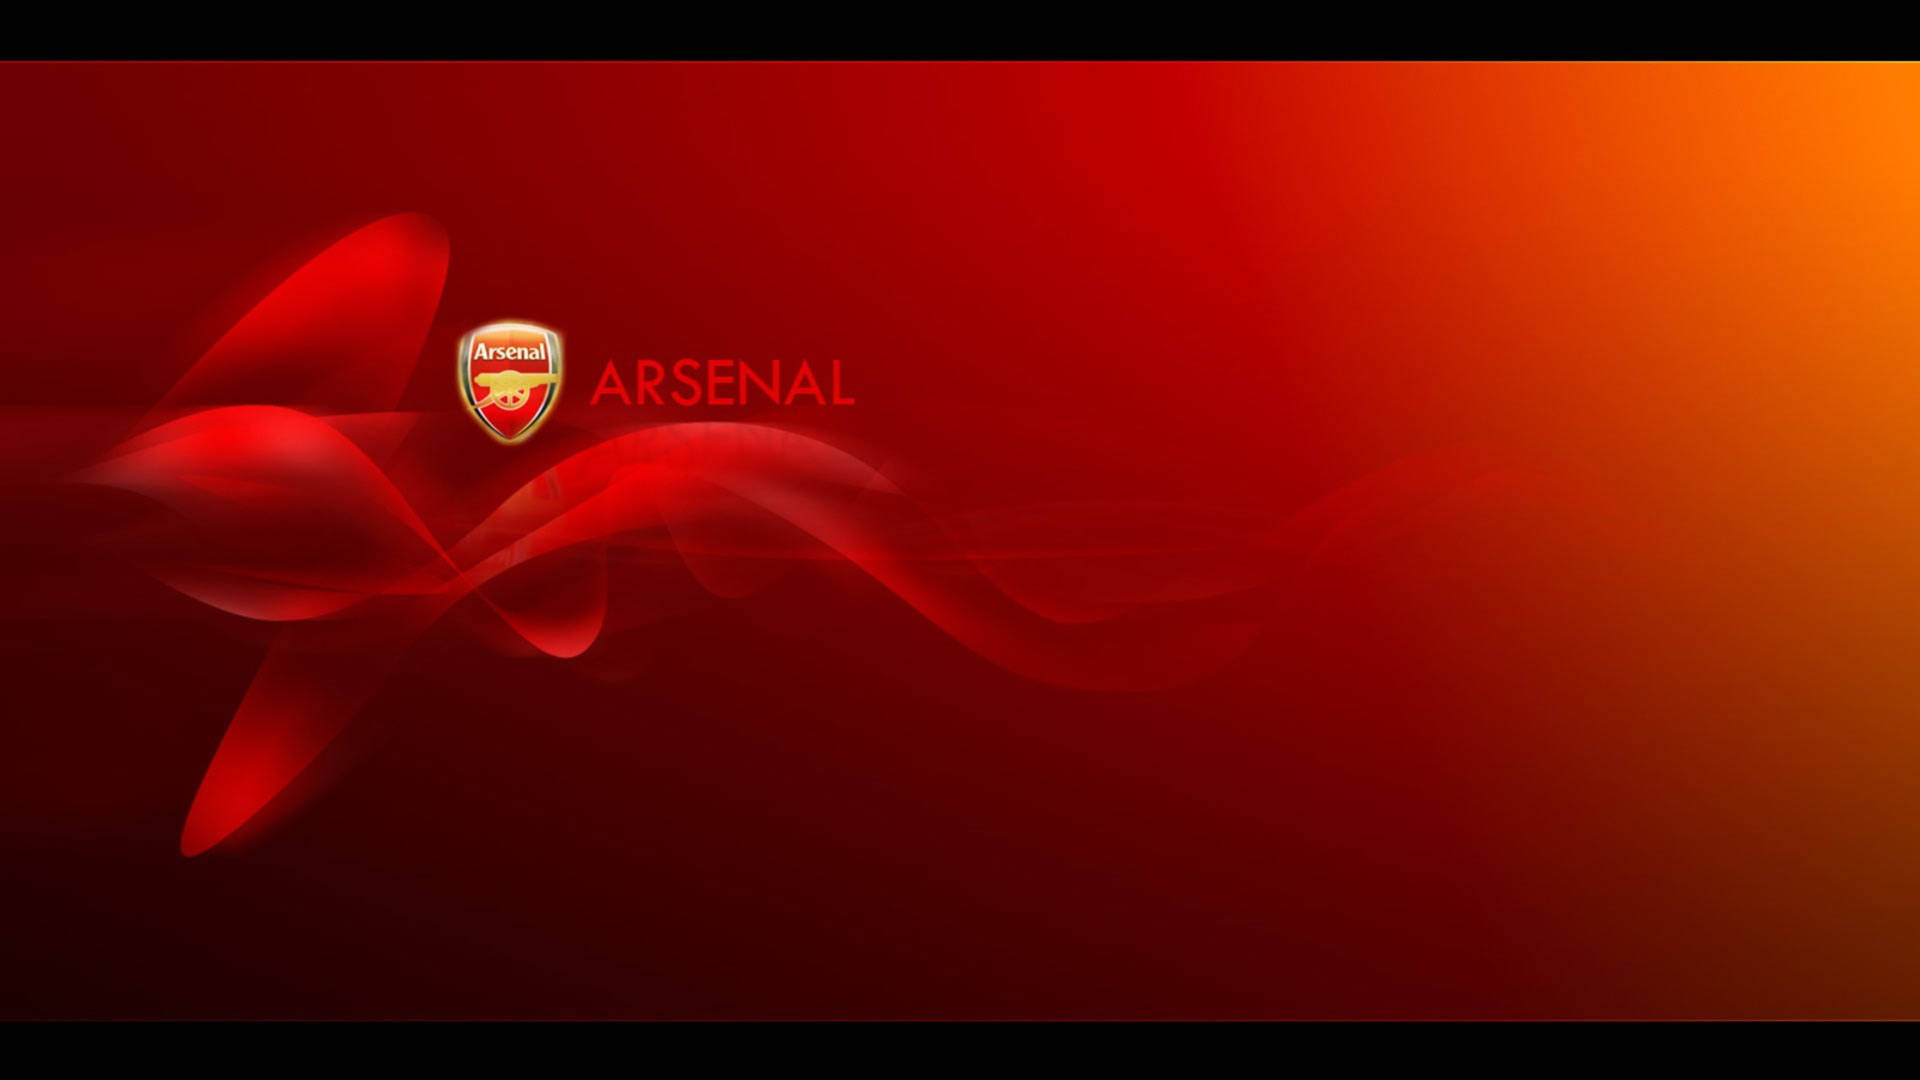 Arsenal Red Digital Art Background